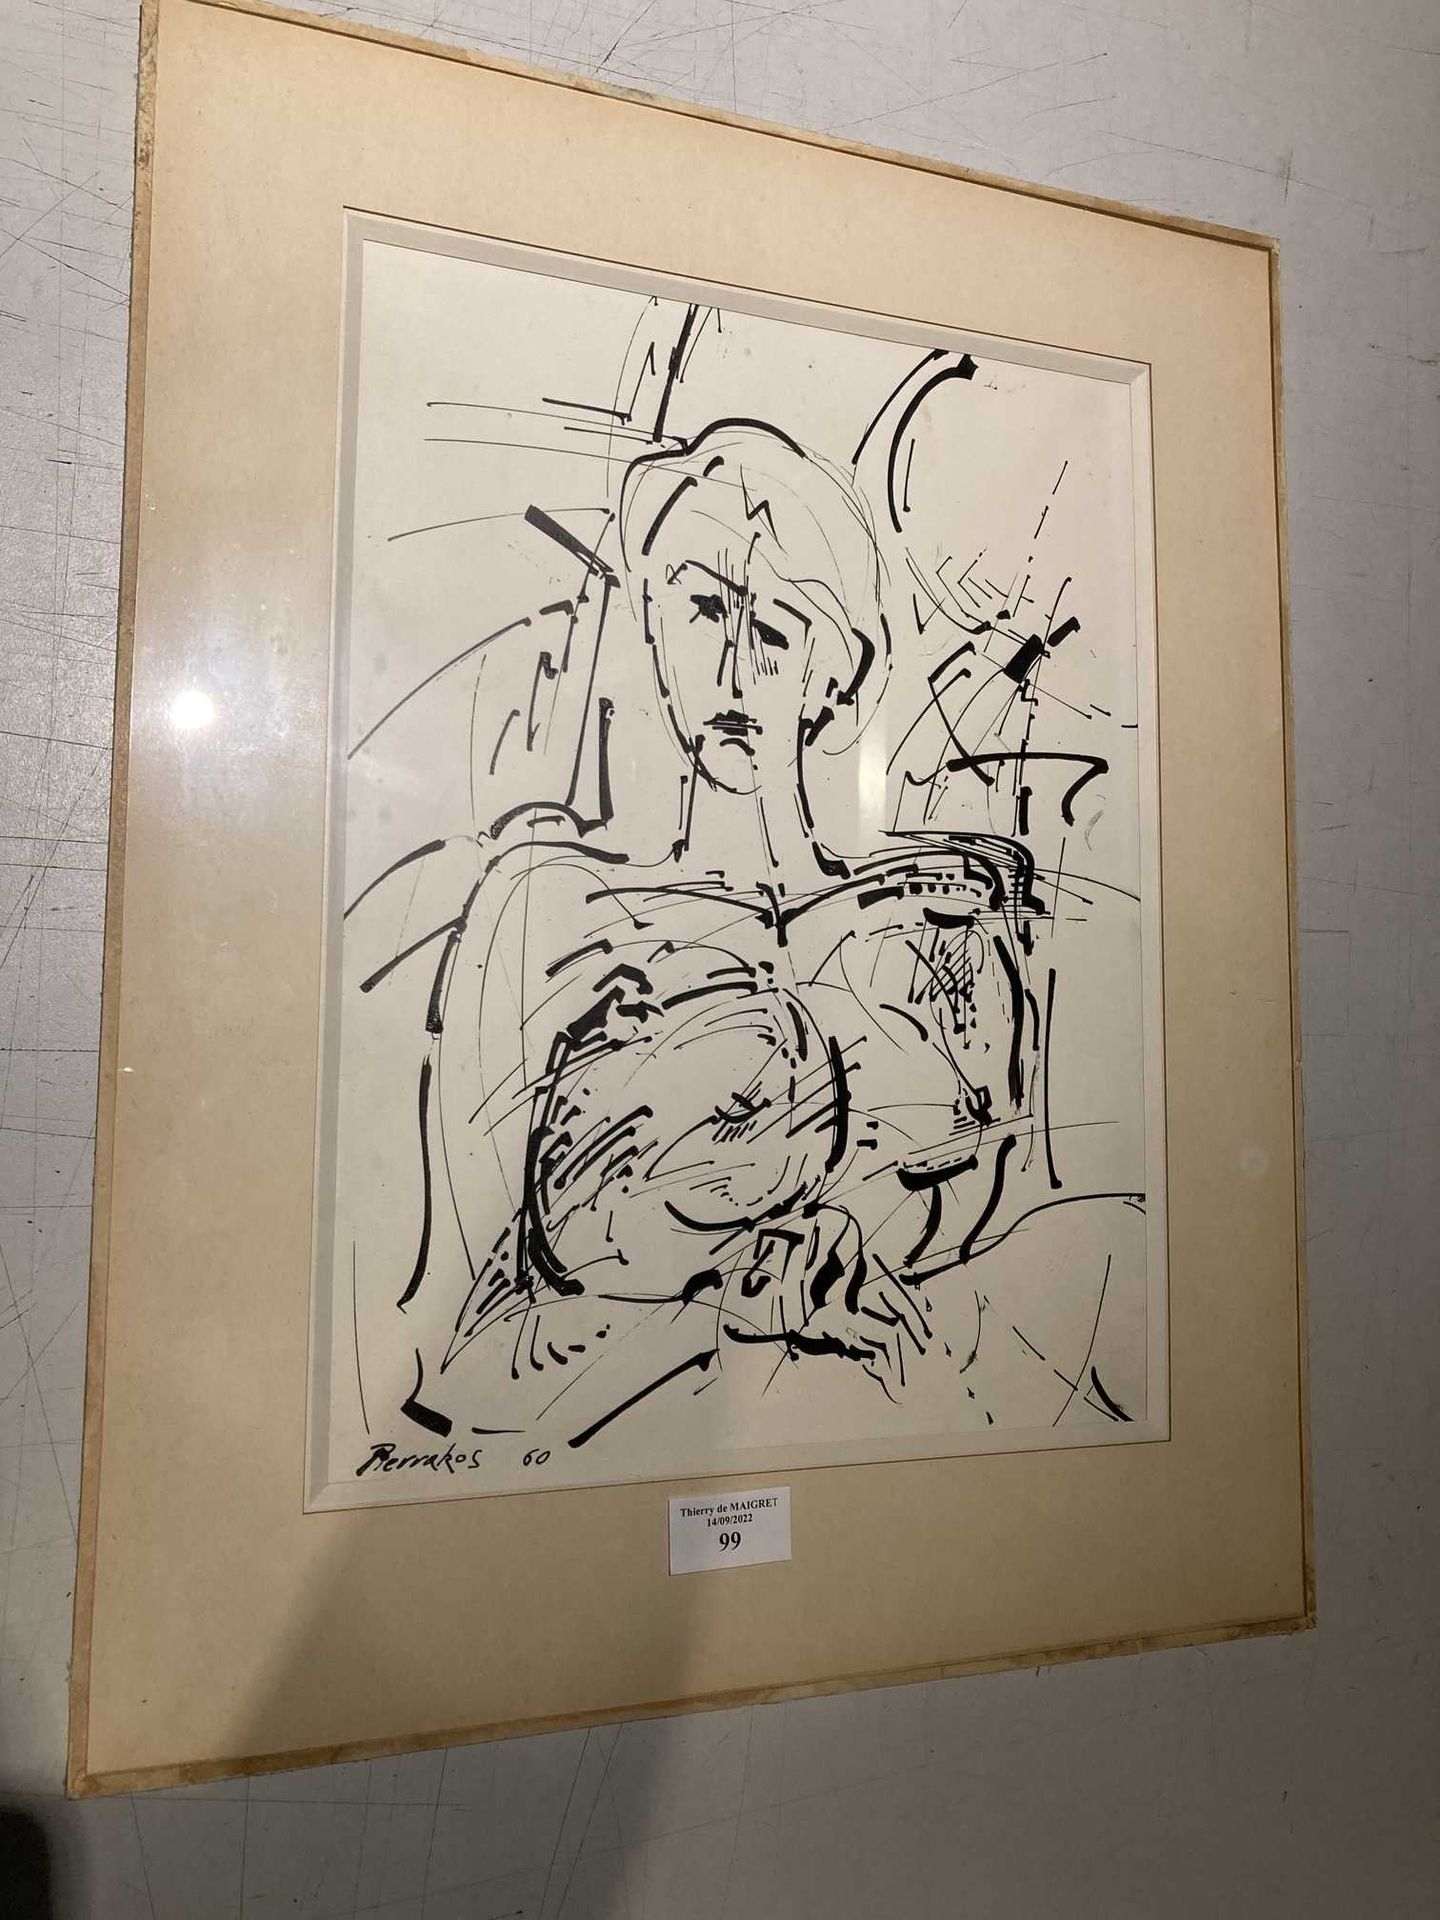 Null 现代学校

一个女人的画像

水墨画，签名为Berrakos 60

35 x 26 cm (见图)